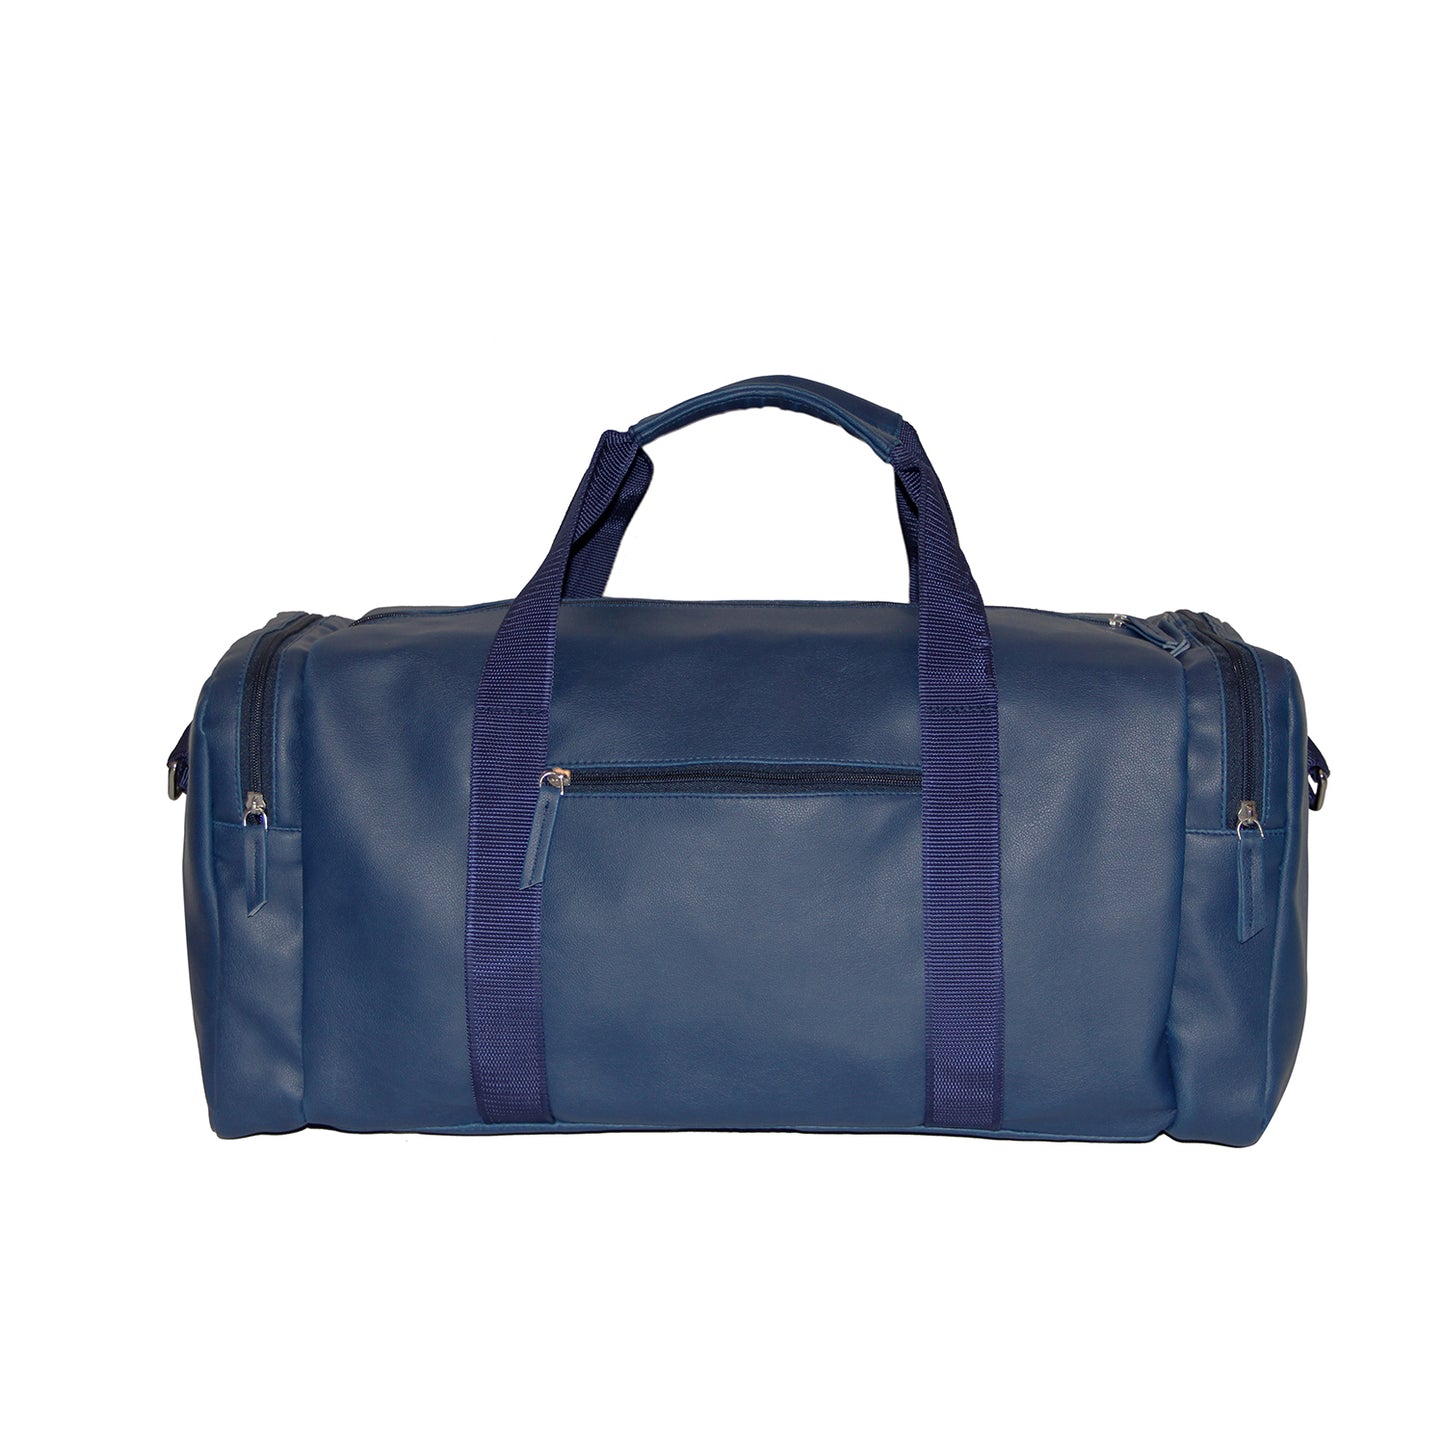 Unisex Navy Blue Duffle Bag